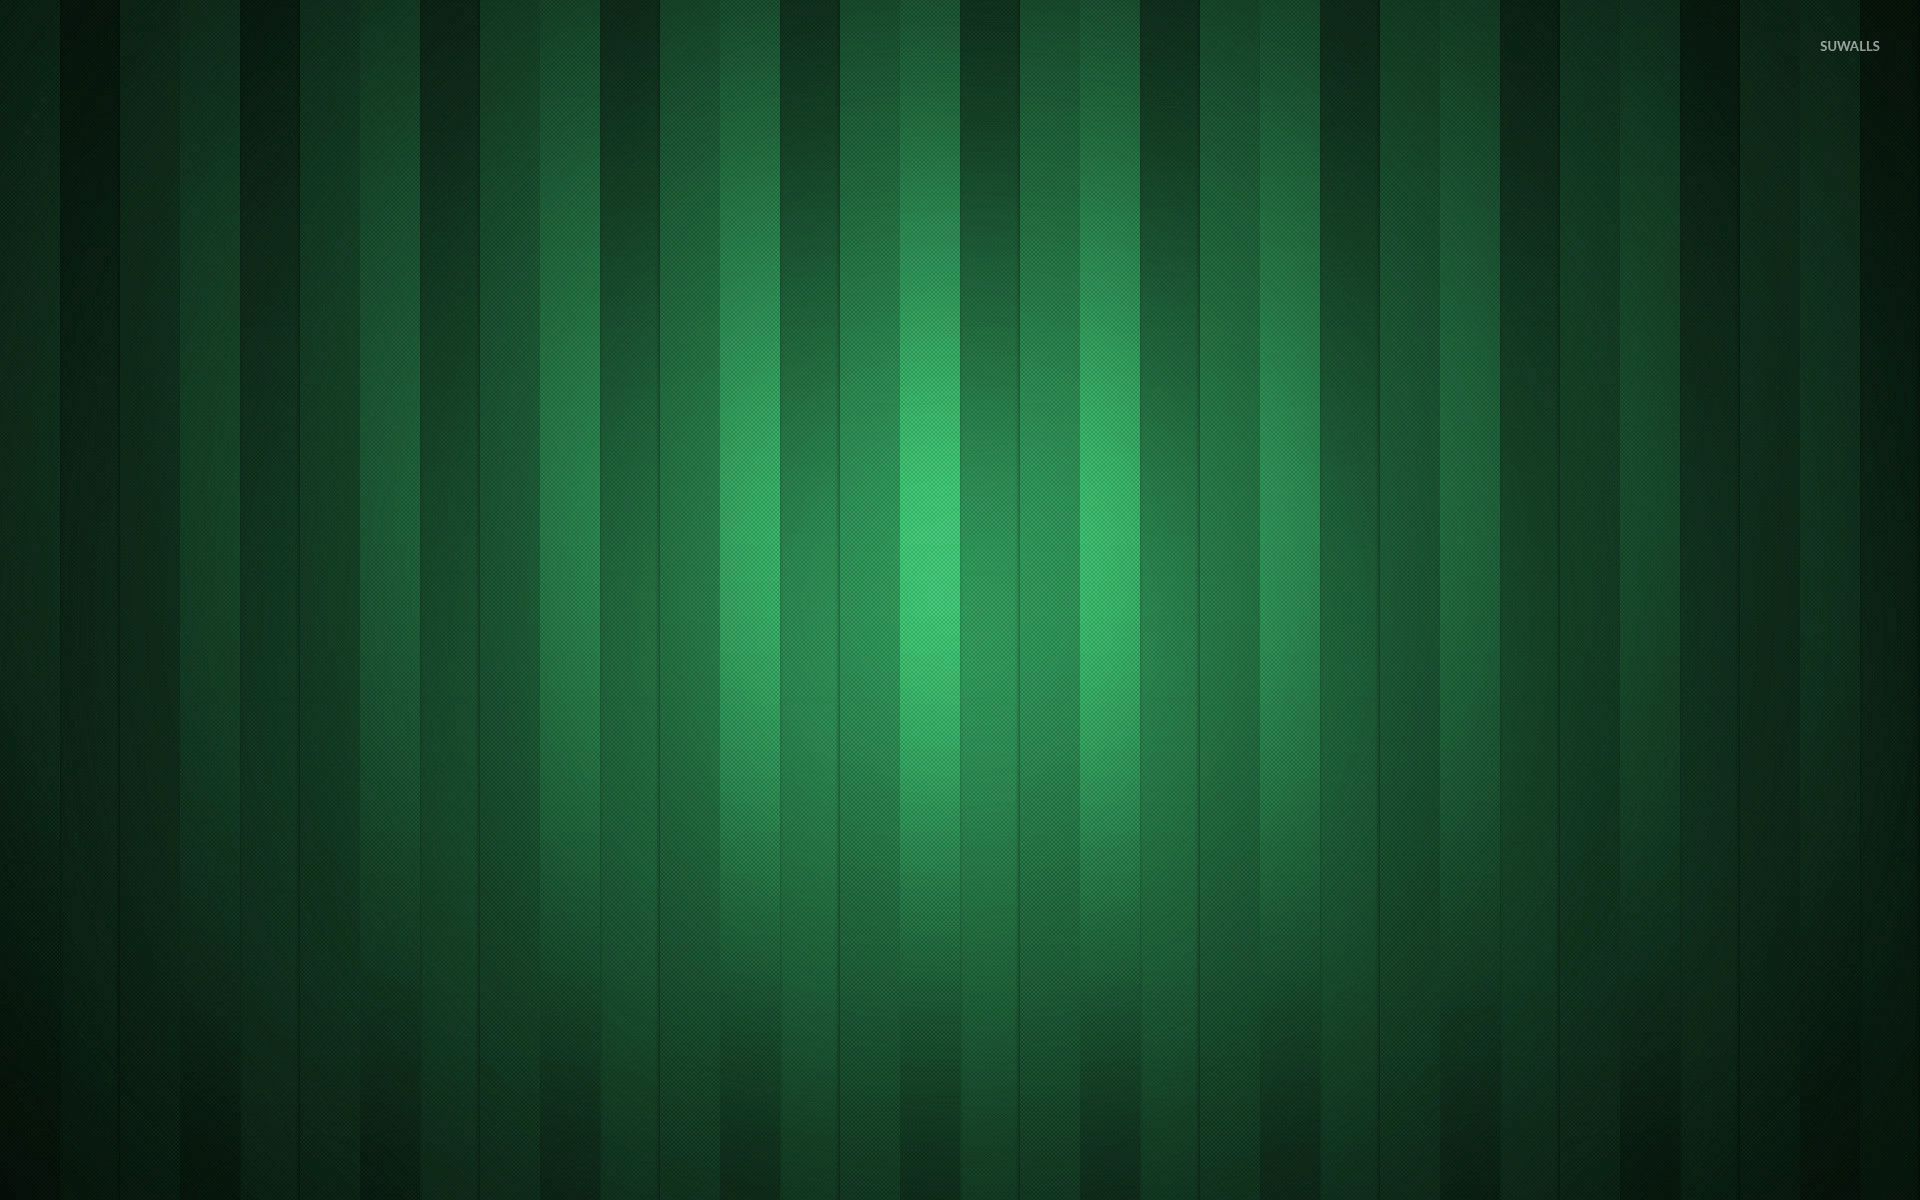 Fondos de pantalla de rayas verdes - FondosMil